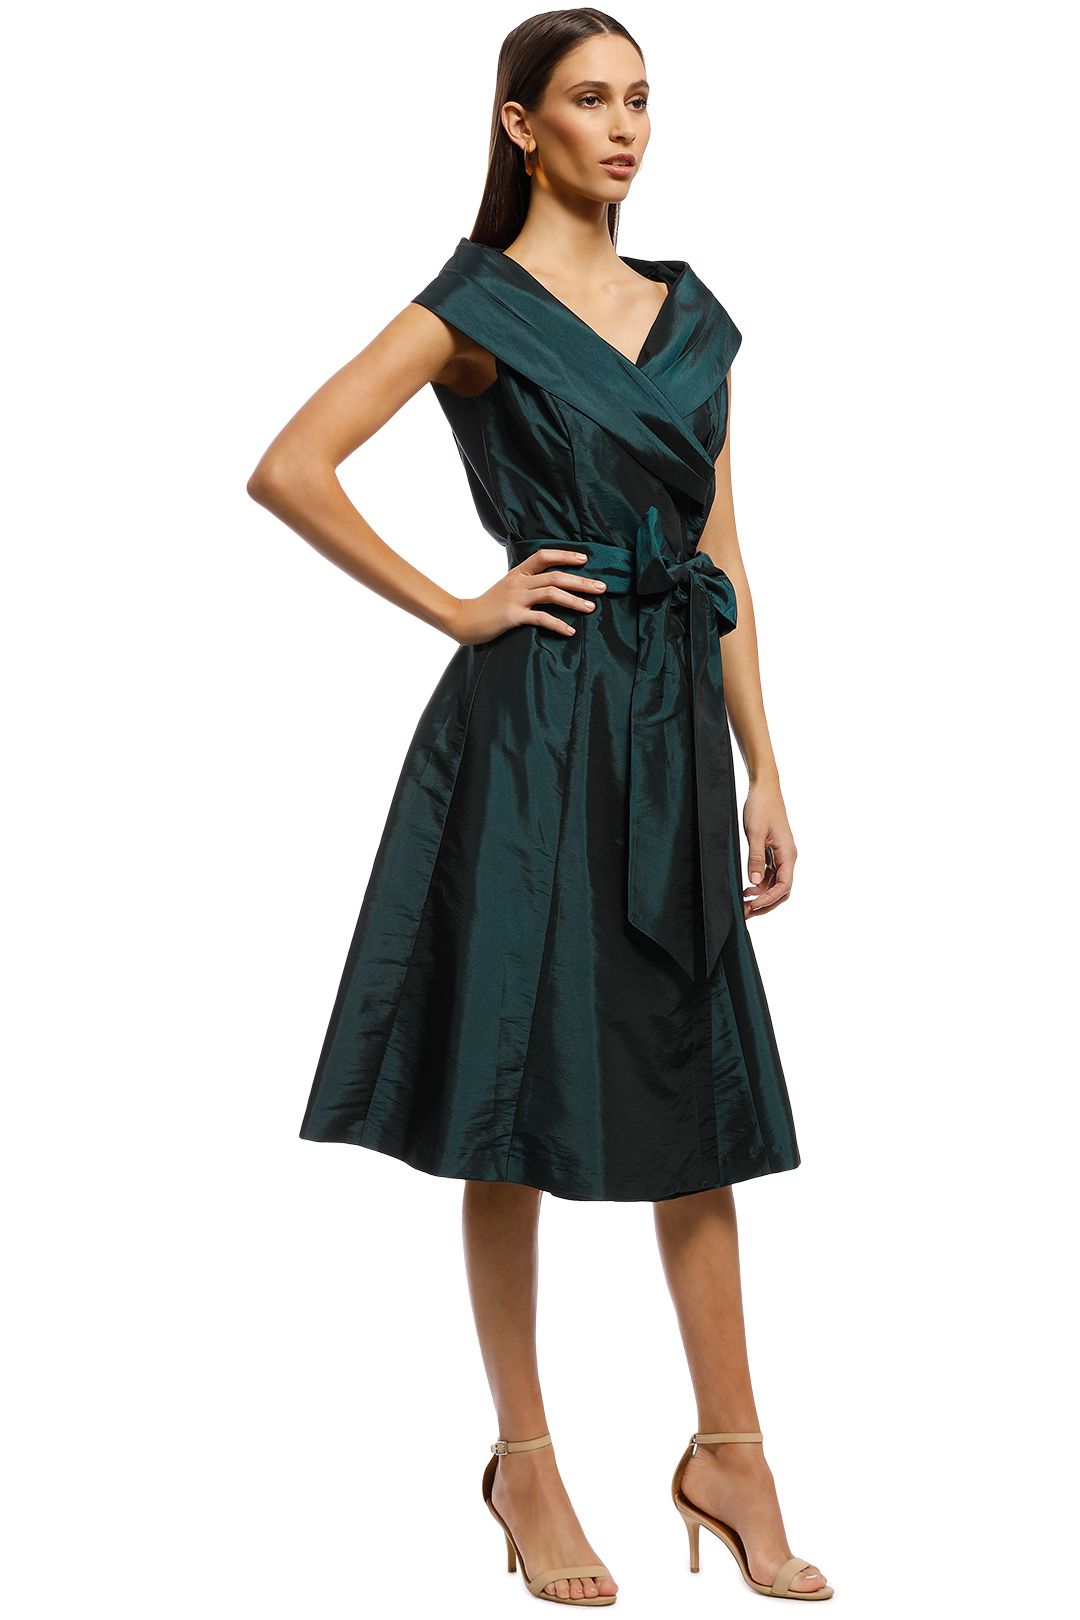 Montique - Valini Tafetta Dress - Emerald - Side